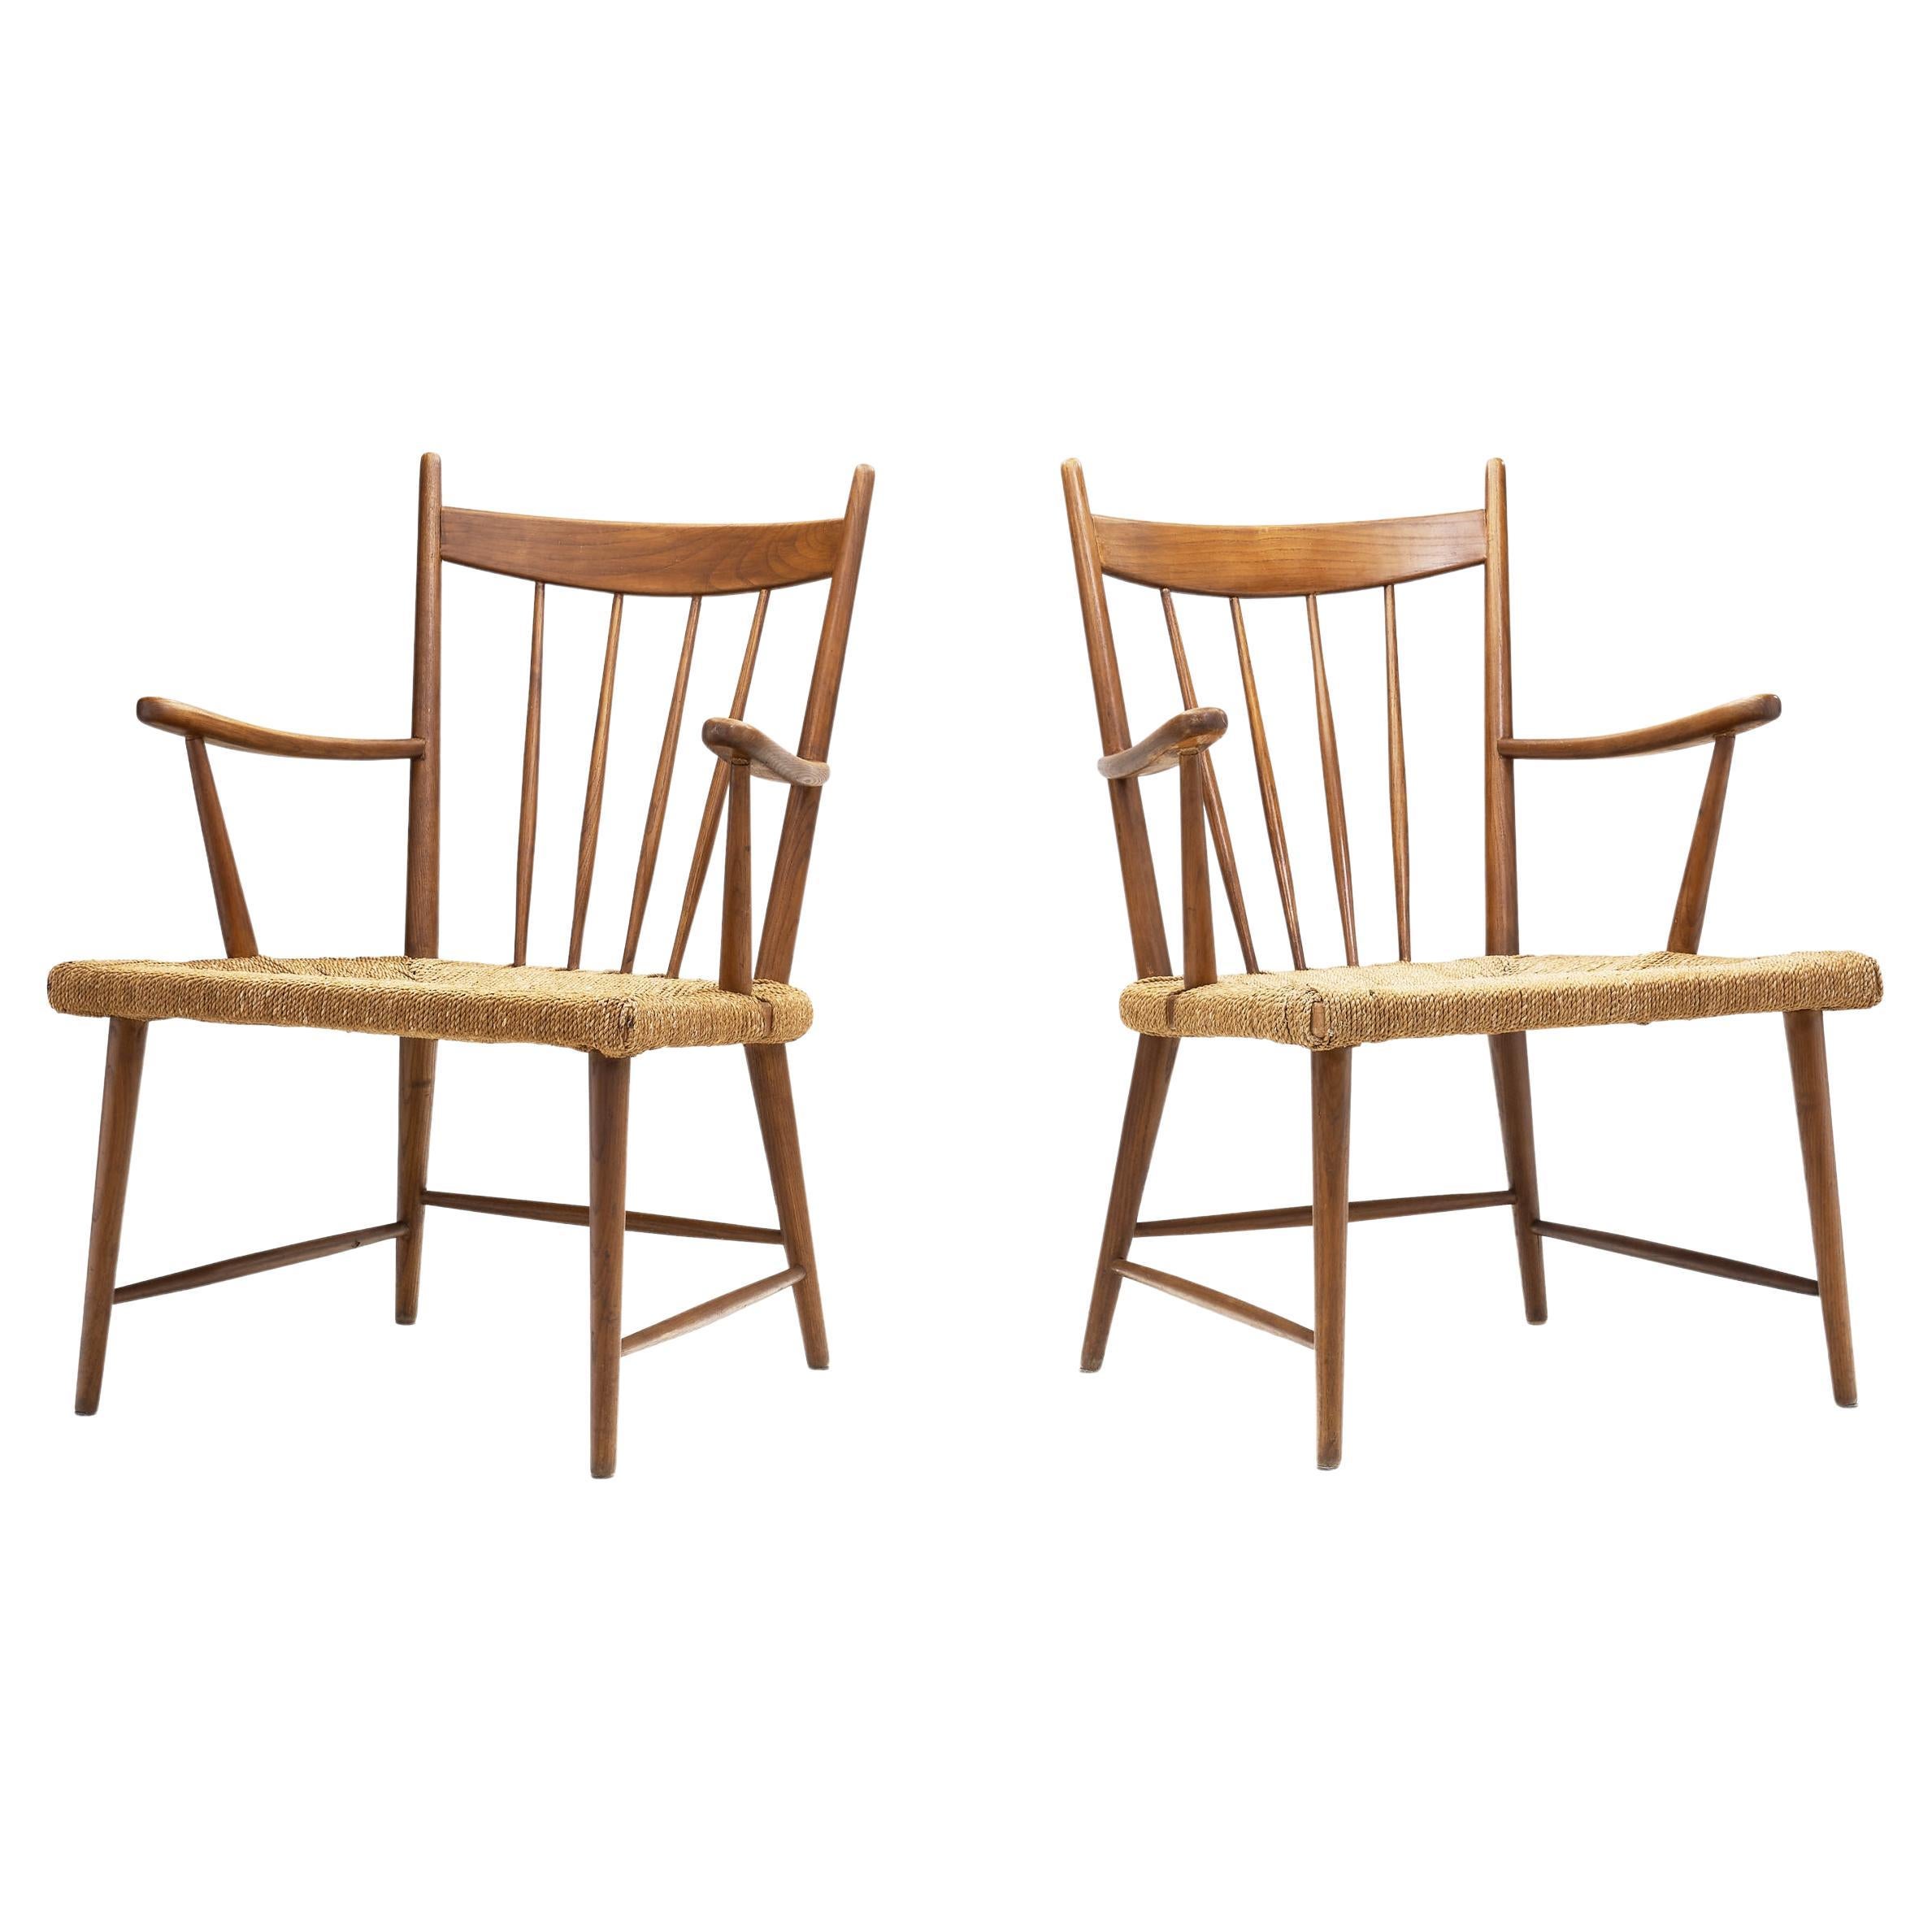 Teak Slatback Chairs with Woven Danish Cord Seats, Denmark ca 1960s For Sale